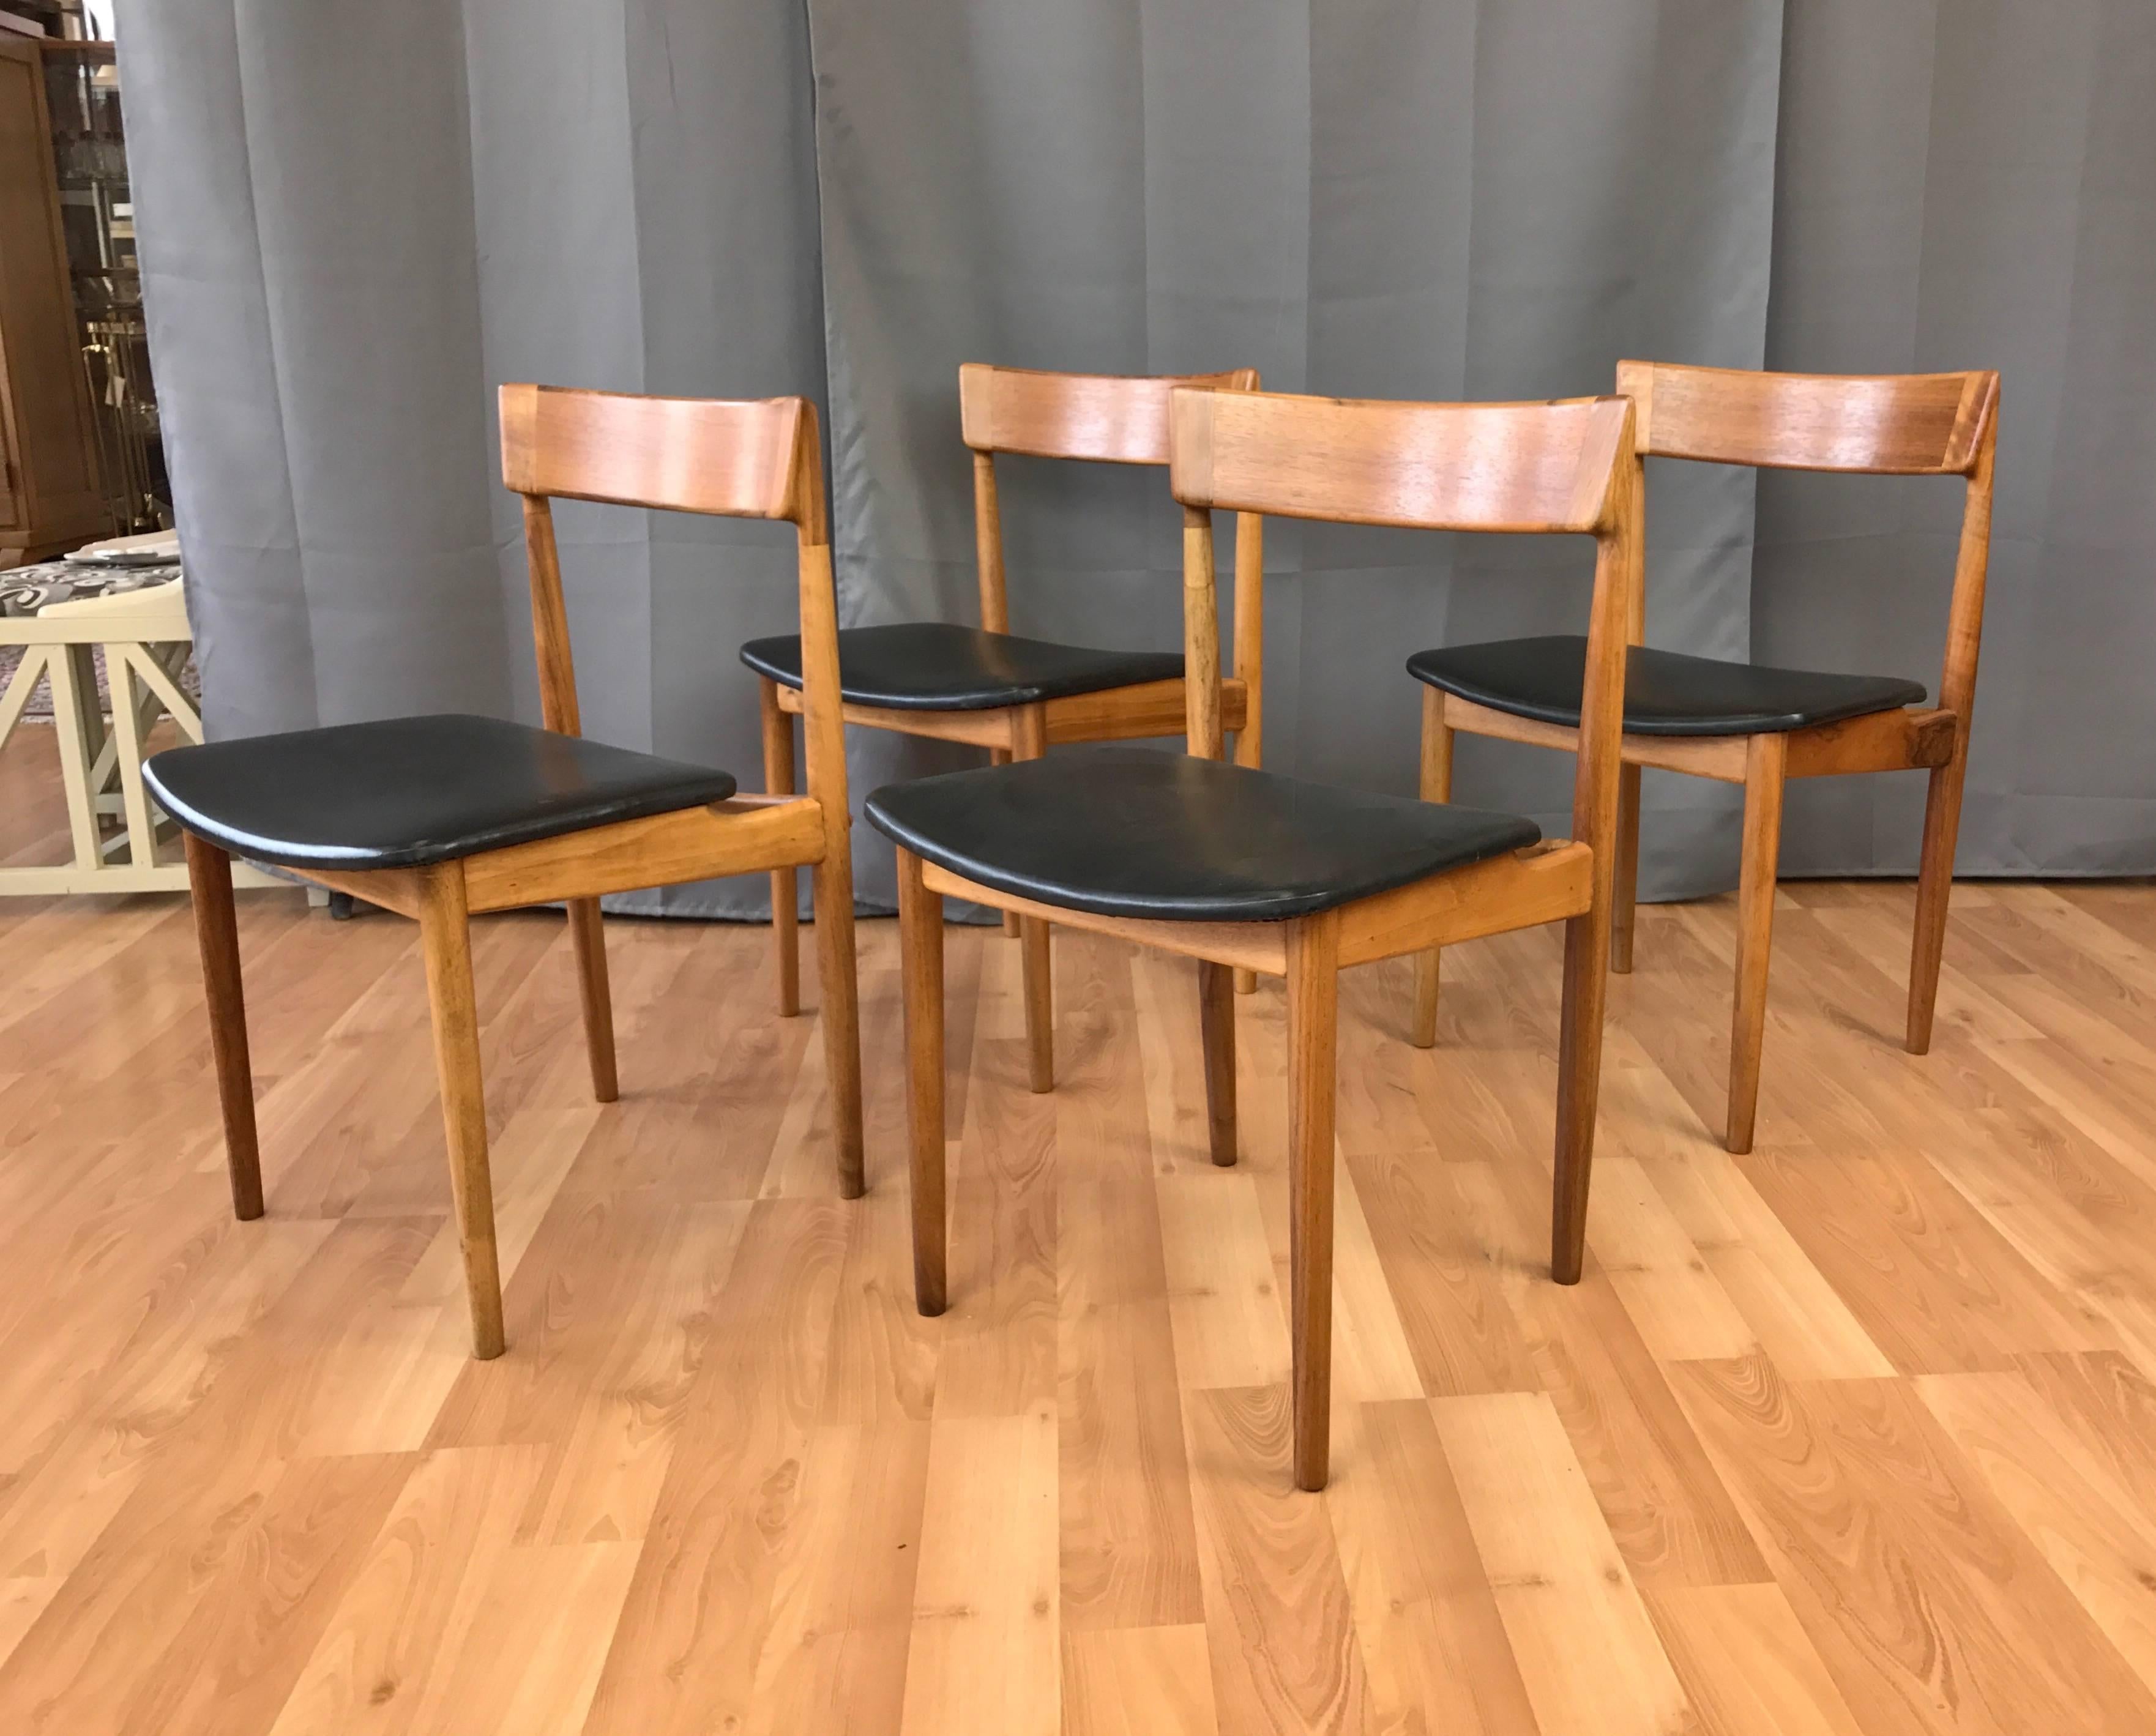 A four-piece set of Model 39 Teak dining or side chairs by Henry Rosengren Hansen for Brande Møbelindustri. 

A Classic Danish modern design in solid teak that features a distinctive sculptural seat back. Upholstered in original black